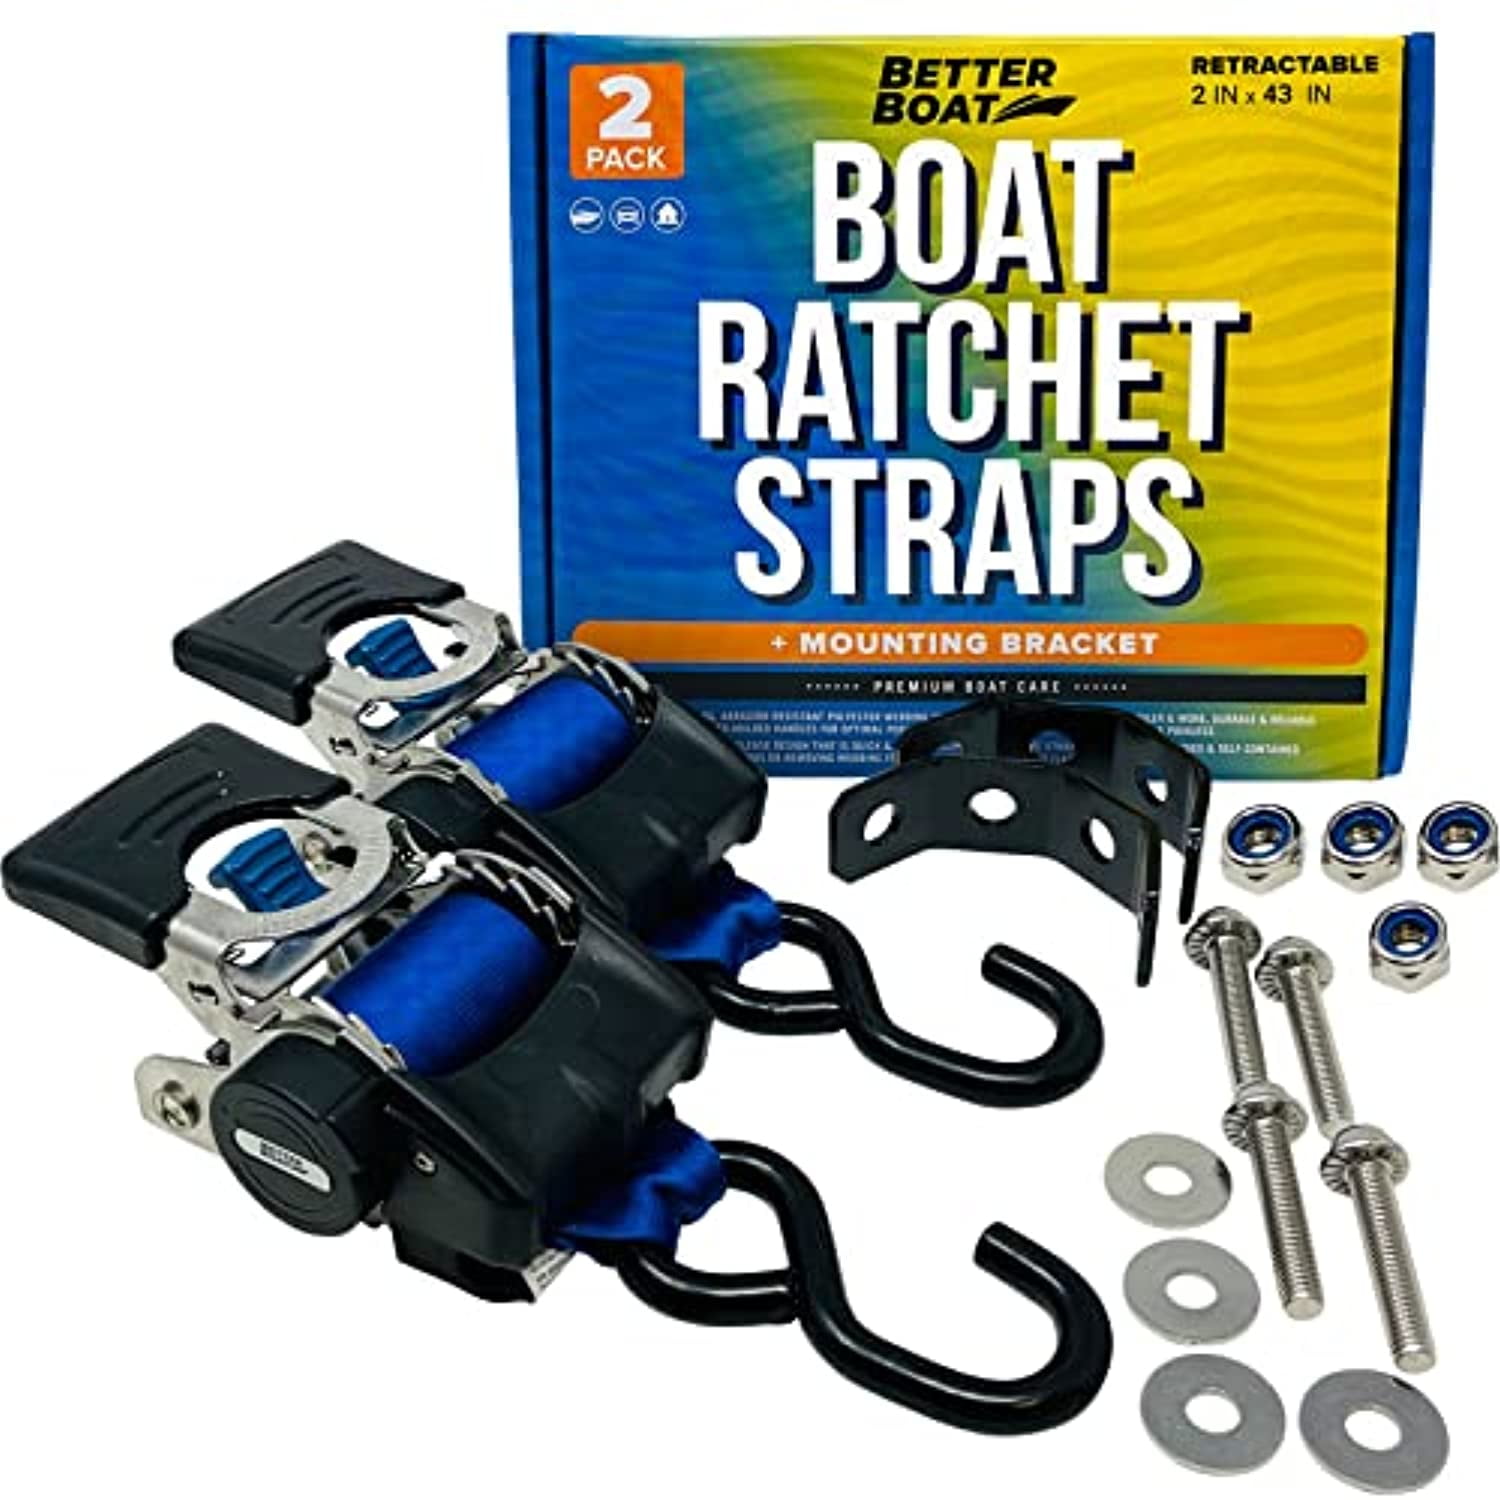 2x43 Blue Stainless Retractable Ratchet Straps - Heavy Duty Set